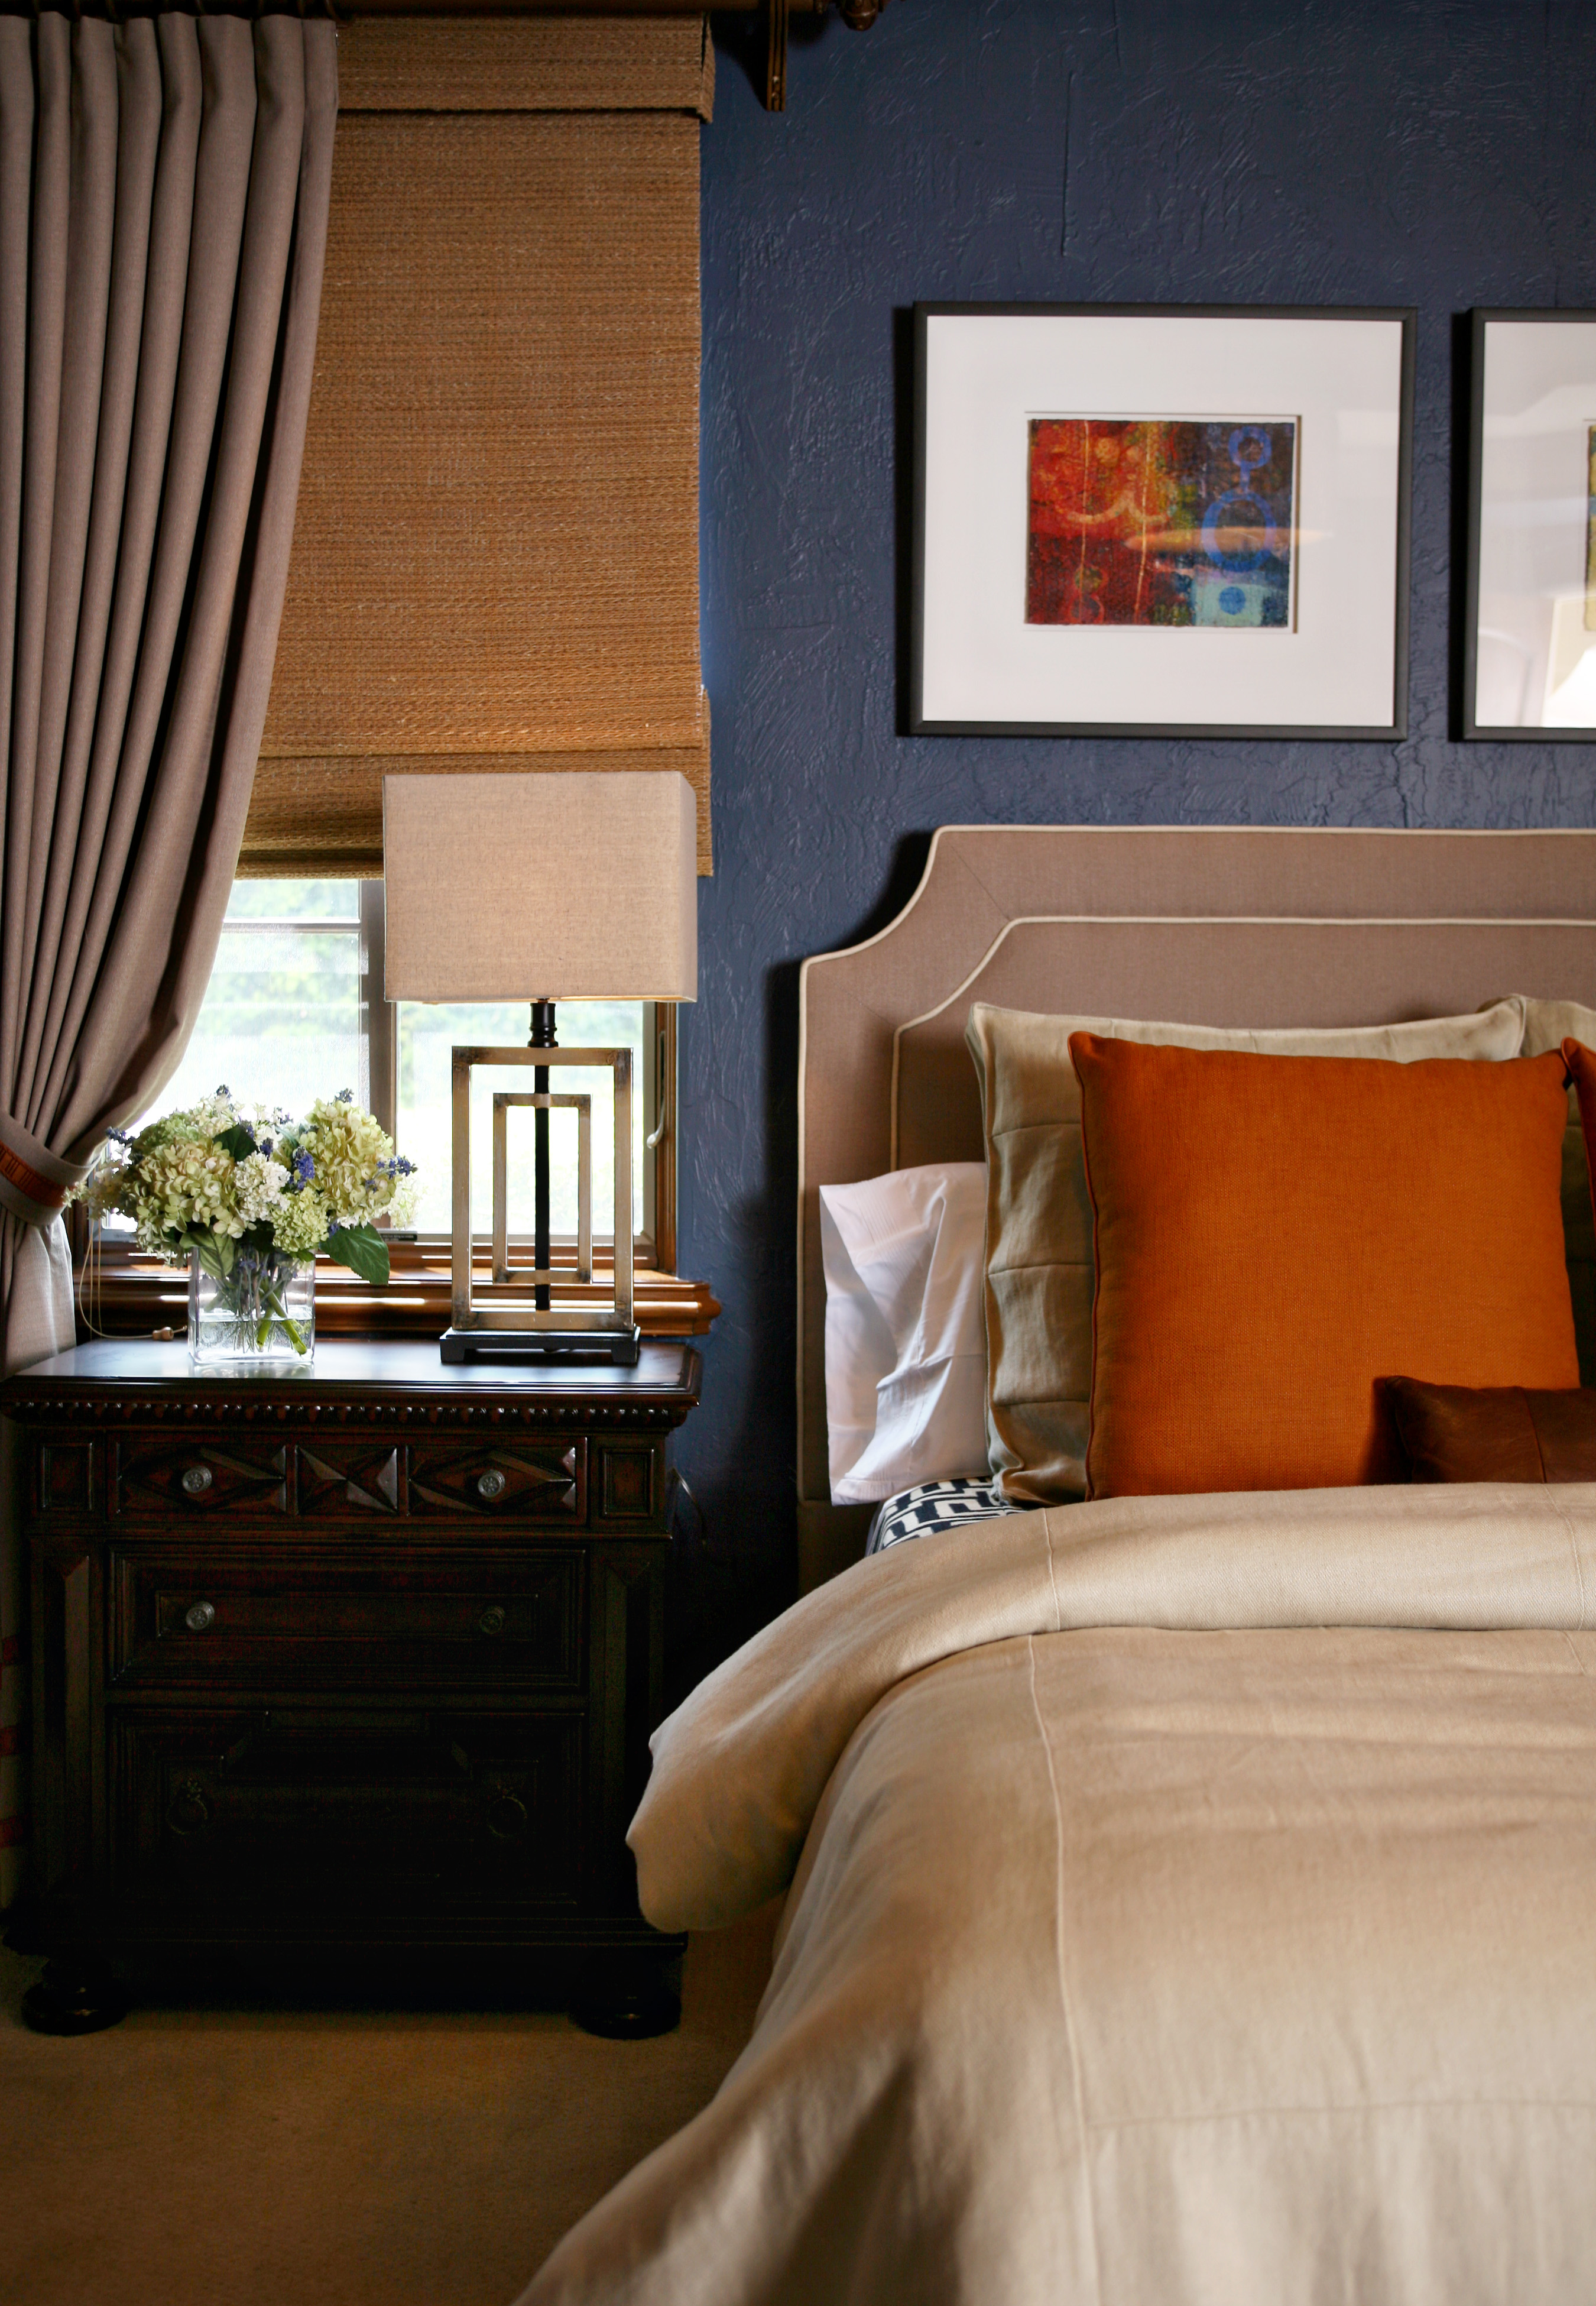 25 Traditional Bedroom Design Ideas - Decoration Love